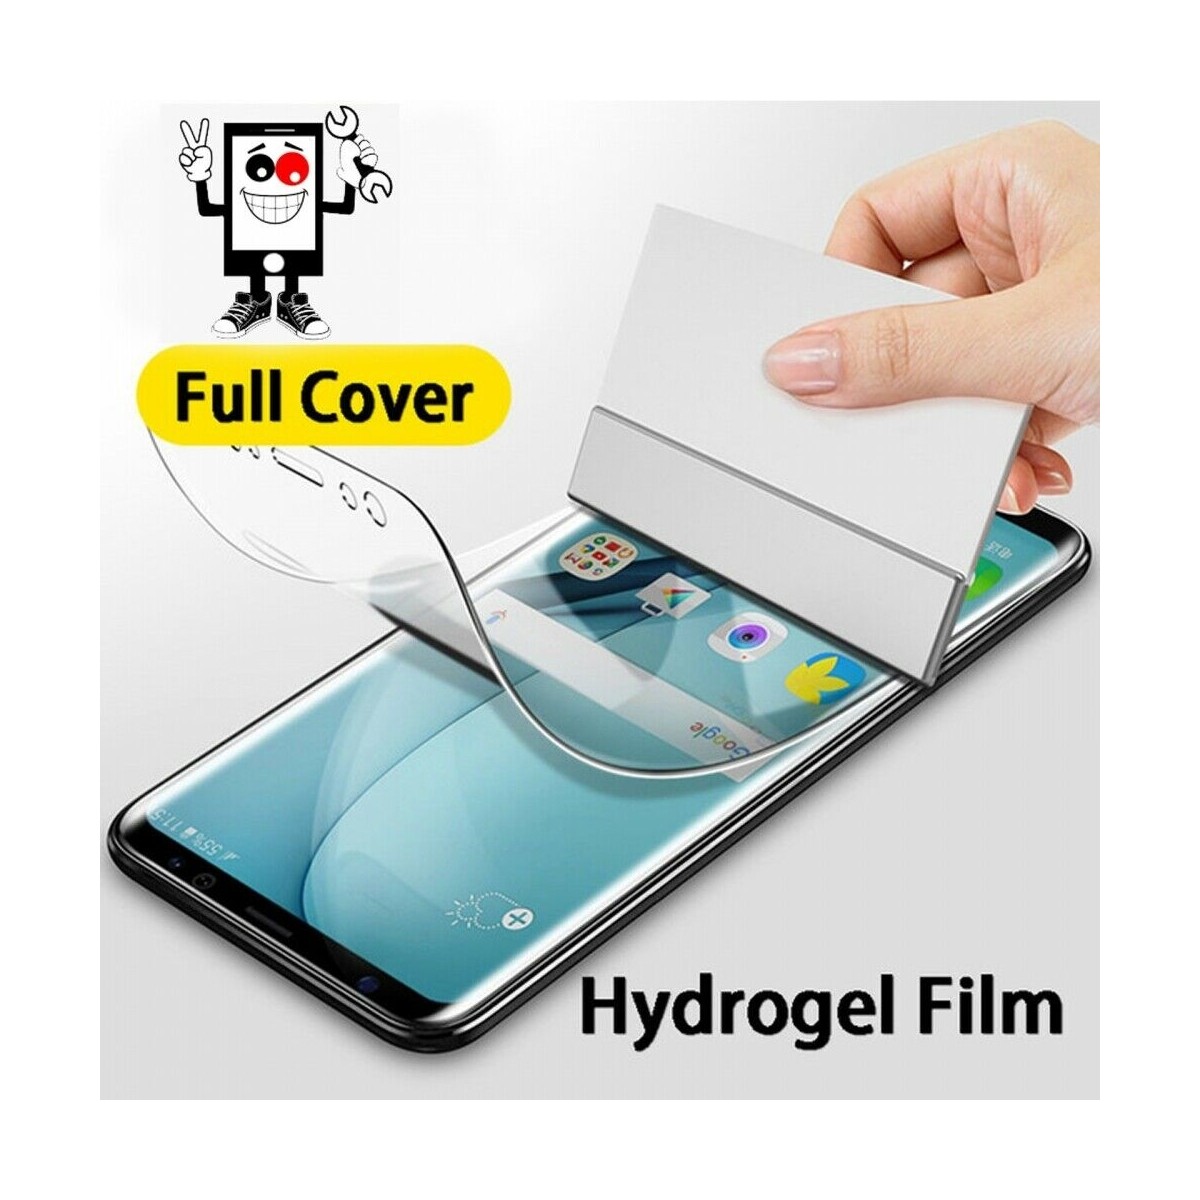 Protector de Pantalla Autorreparable de Hidrogel para LG G Flex 2